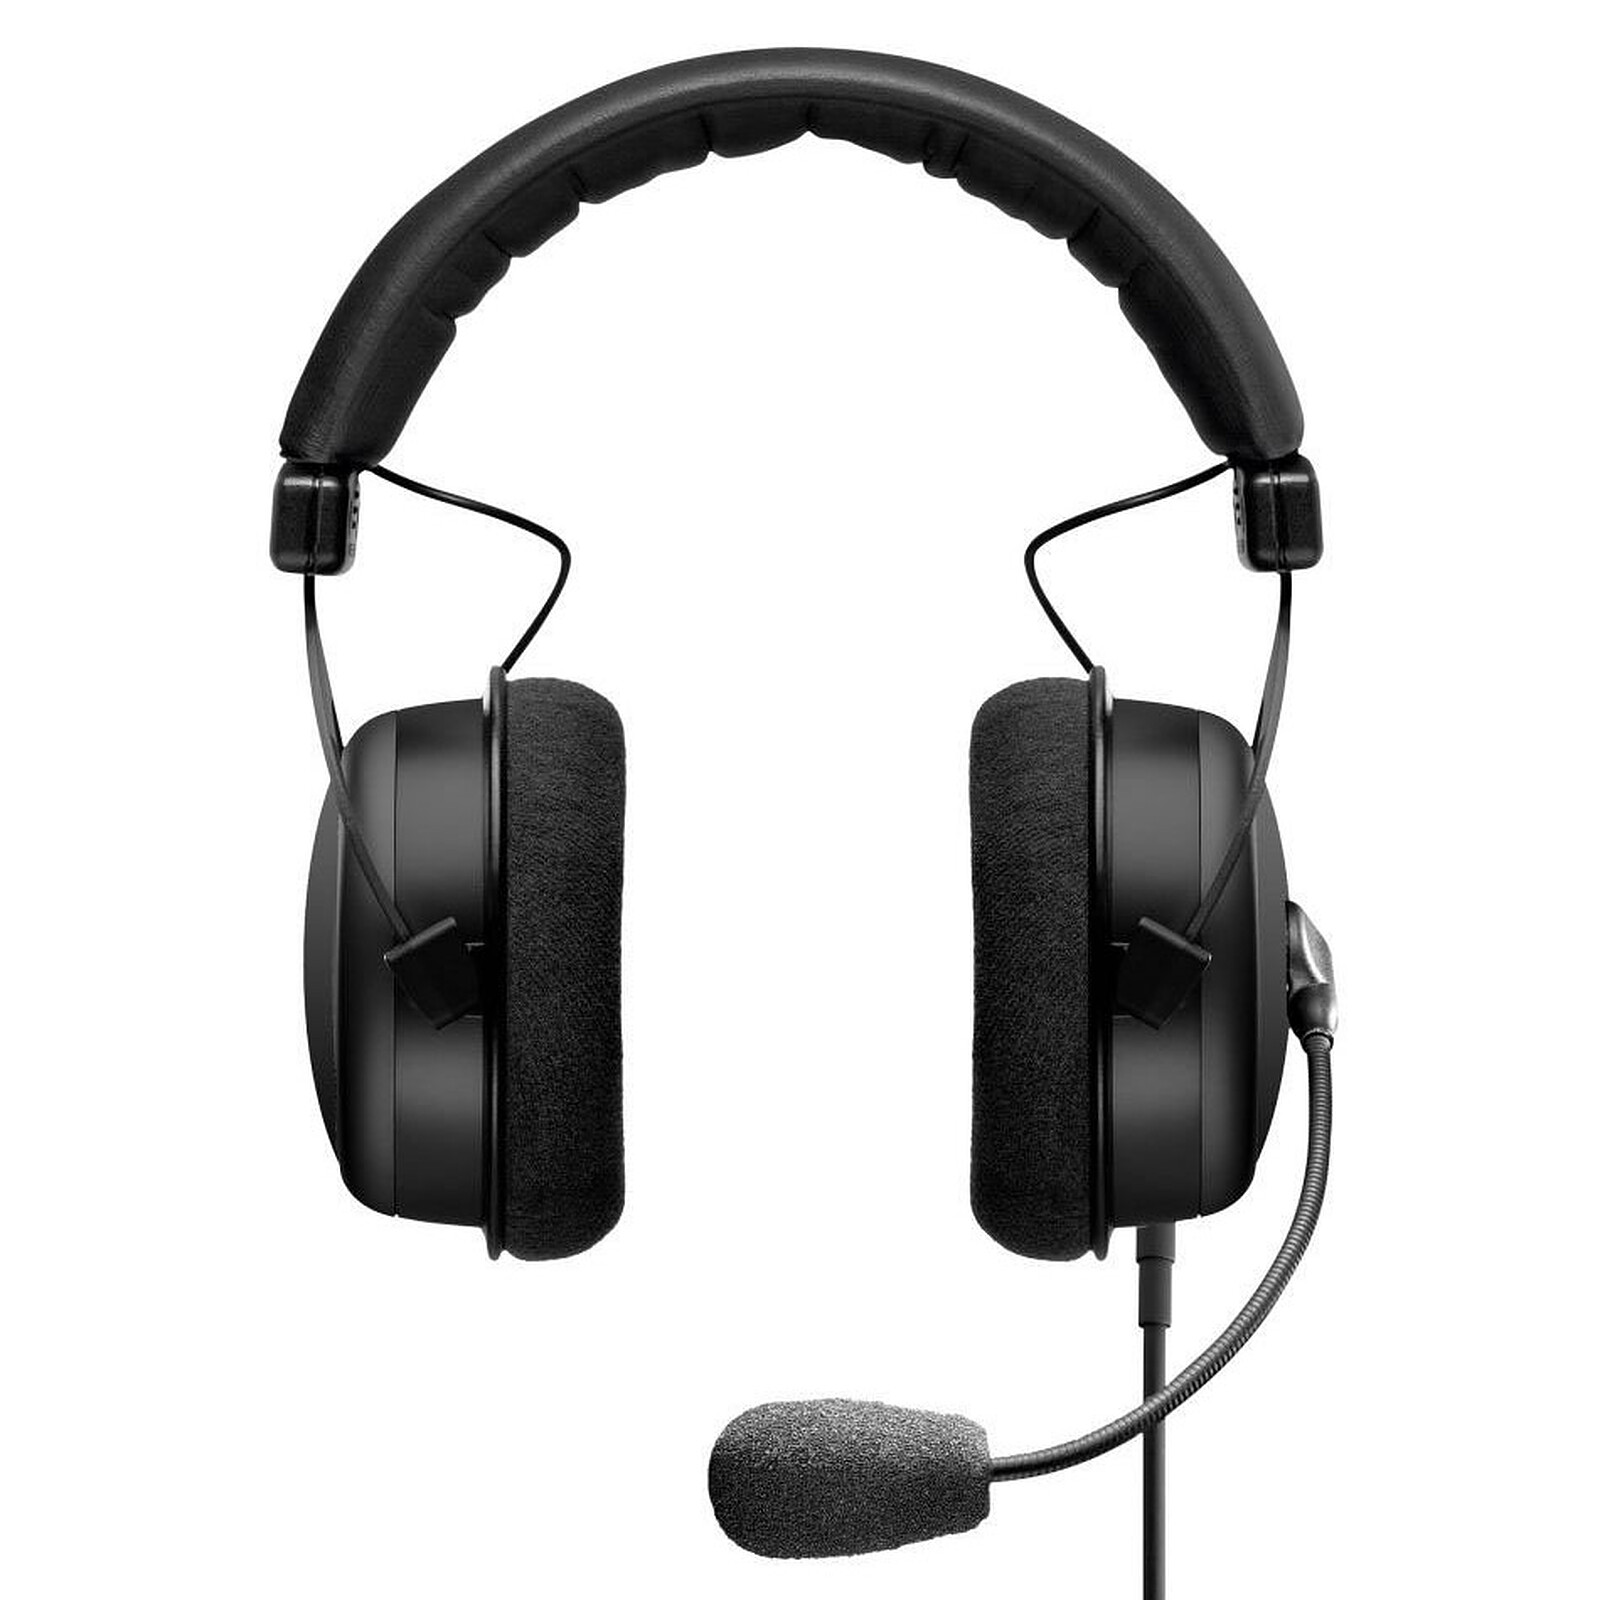 BeyerDynamic MMX 300 PC Gaming Digital Headset with Microphone